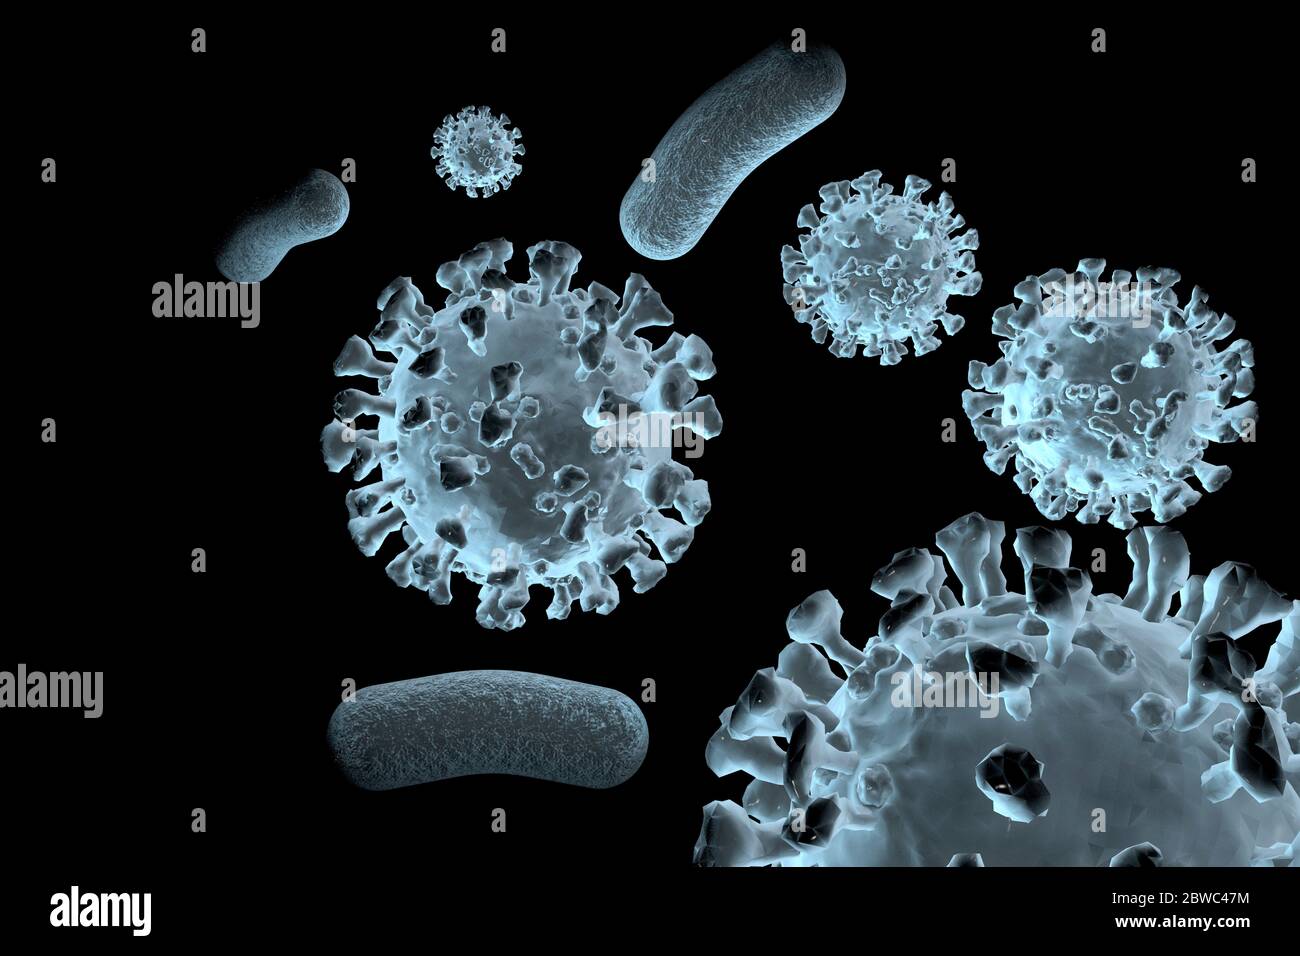 ein fieses Virus befaellt die Welt - Symbolbild: CGI-Visualisierung: Coronavirus Covid 19, SARS 2, andere Virenund Bakterien/ a horrible new virus inf Stock Photo